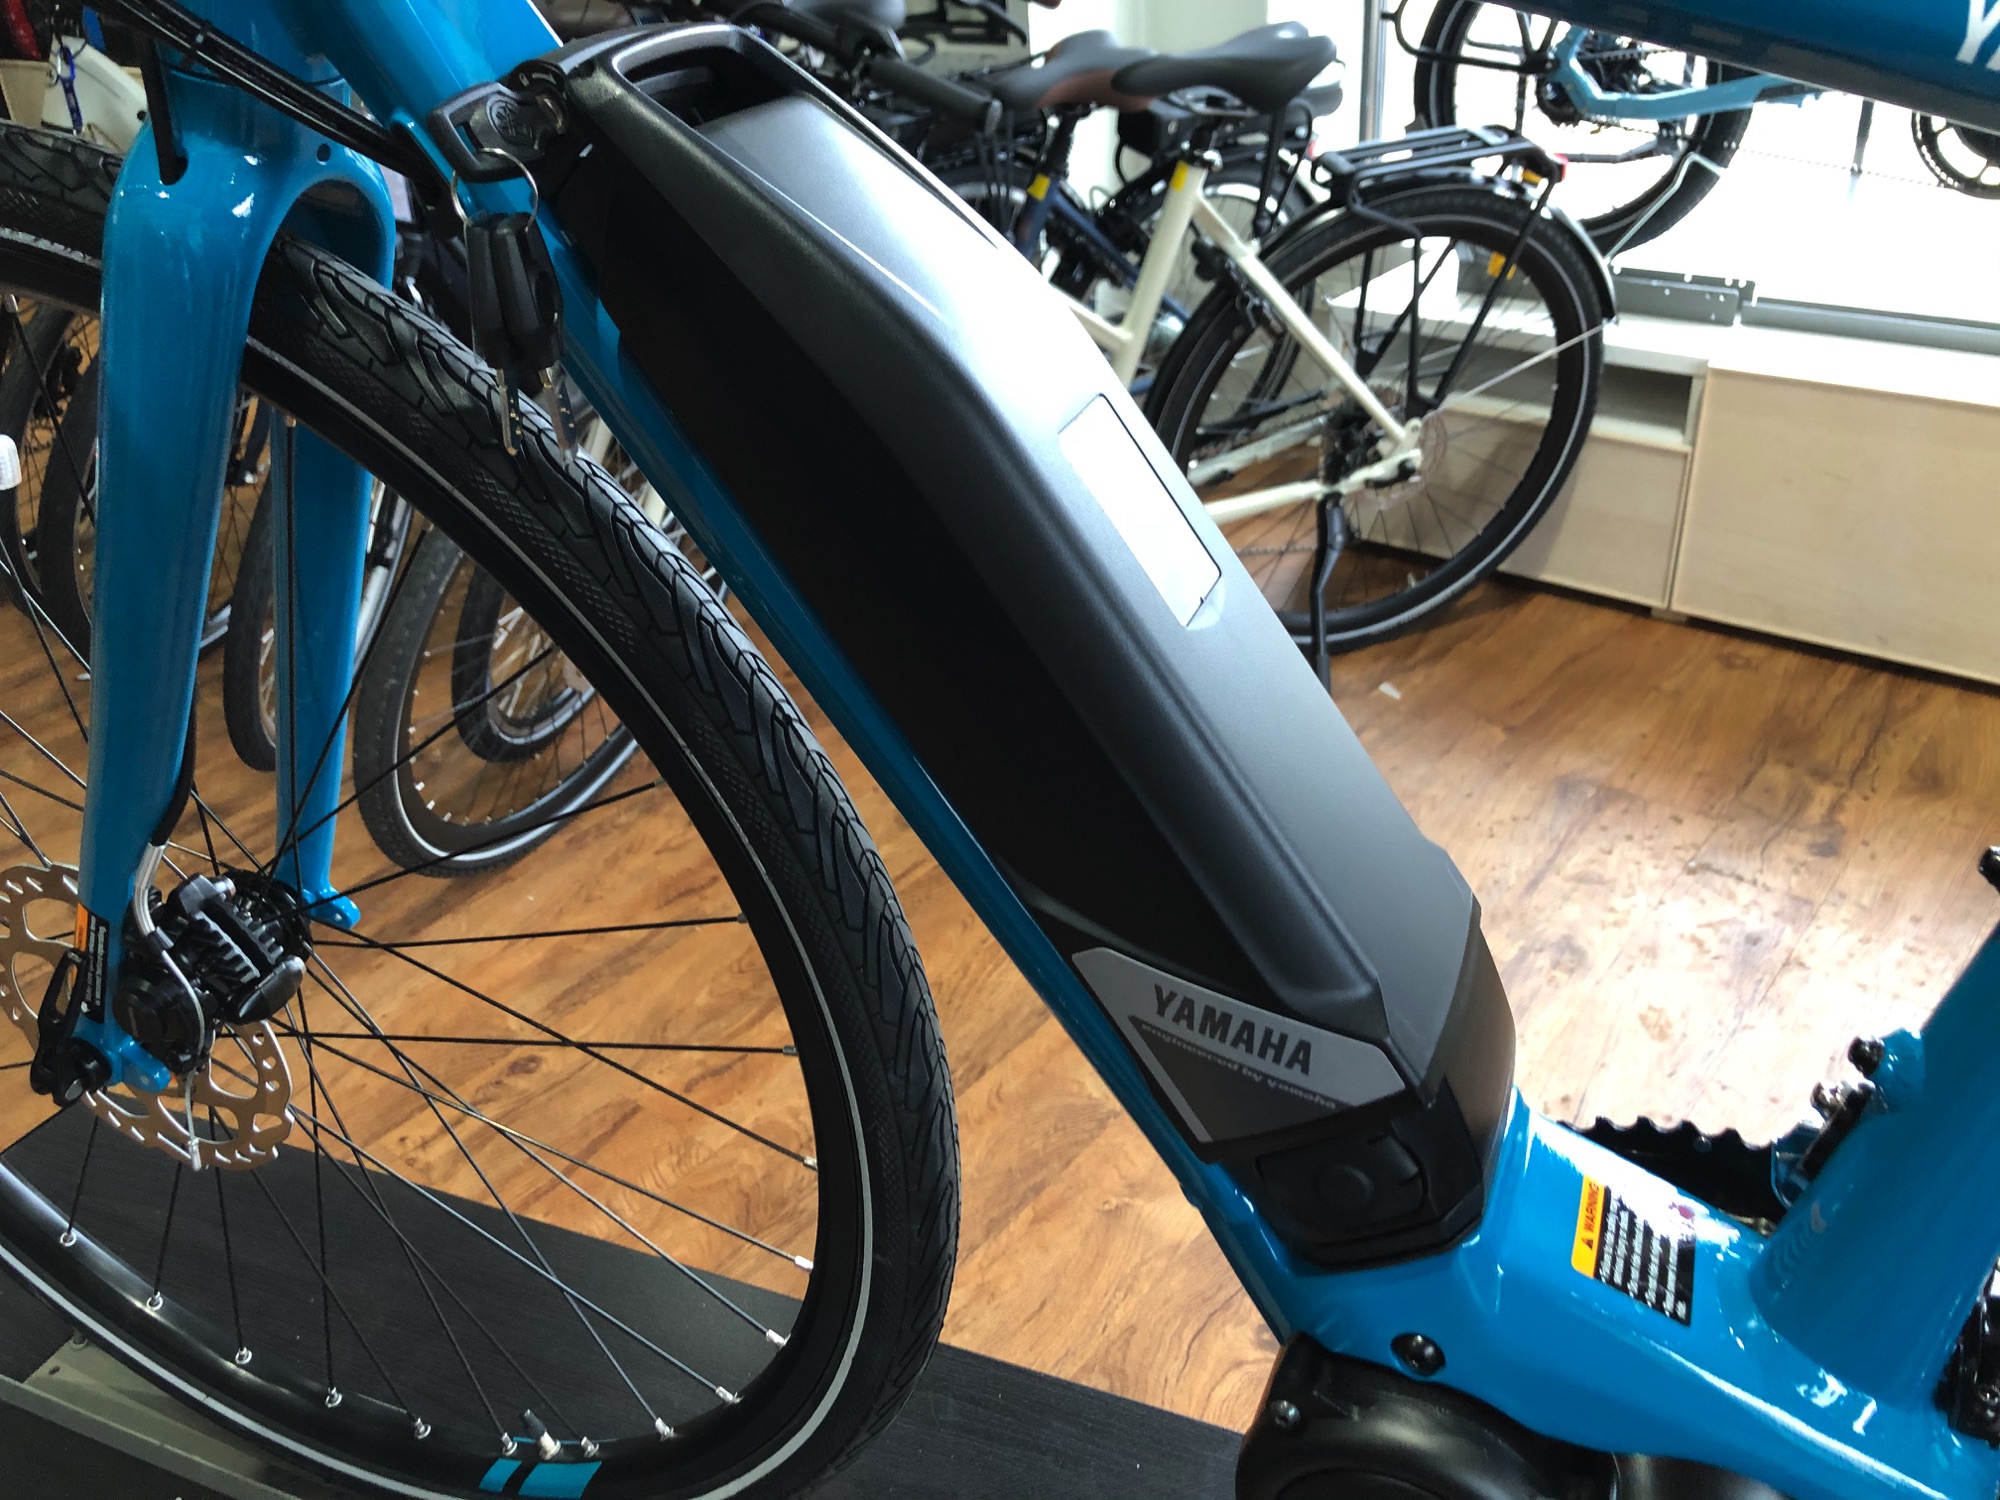 Yamaha CrossCore pedal assist bicycle